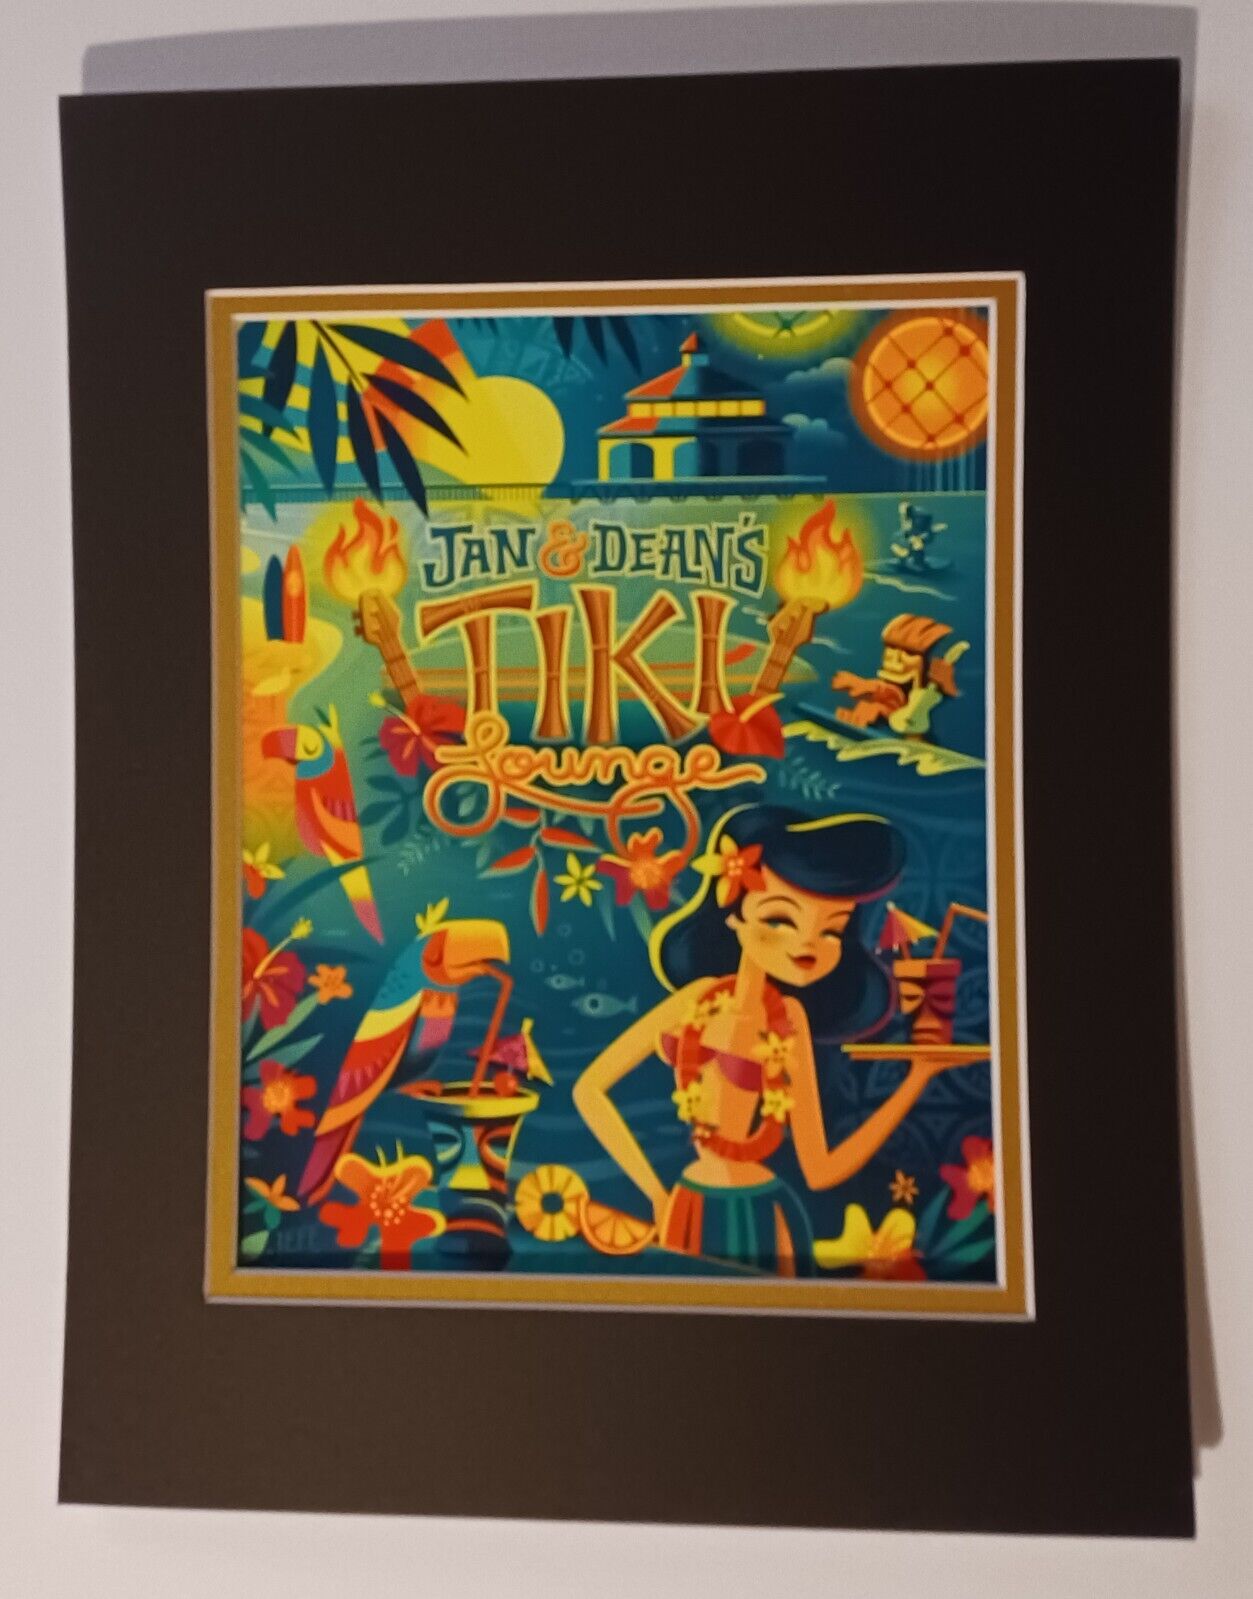 Jan & Dean’s Tiki Lounge matted print by Jeff Granito